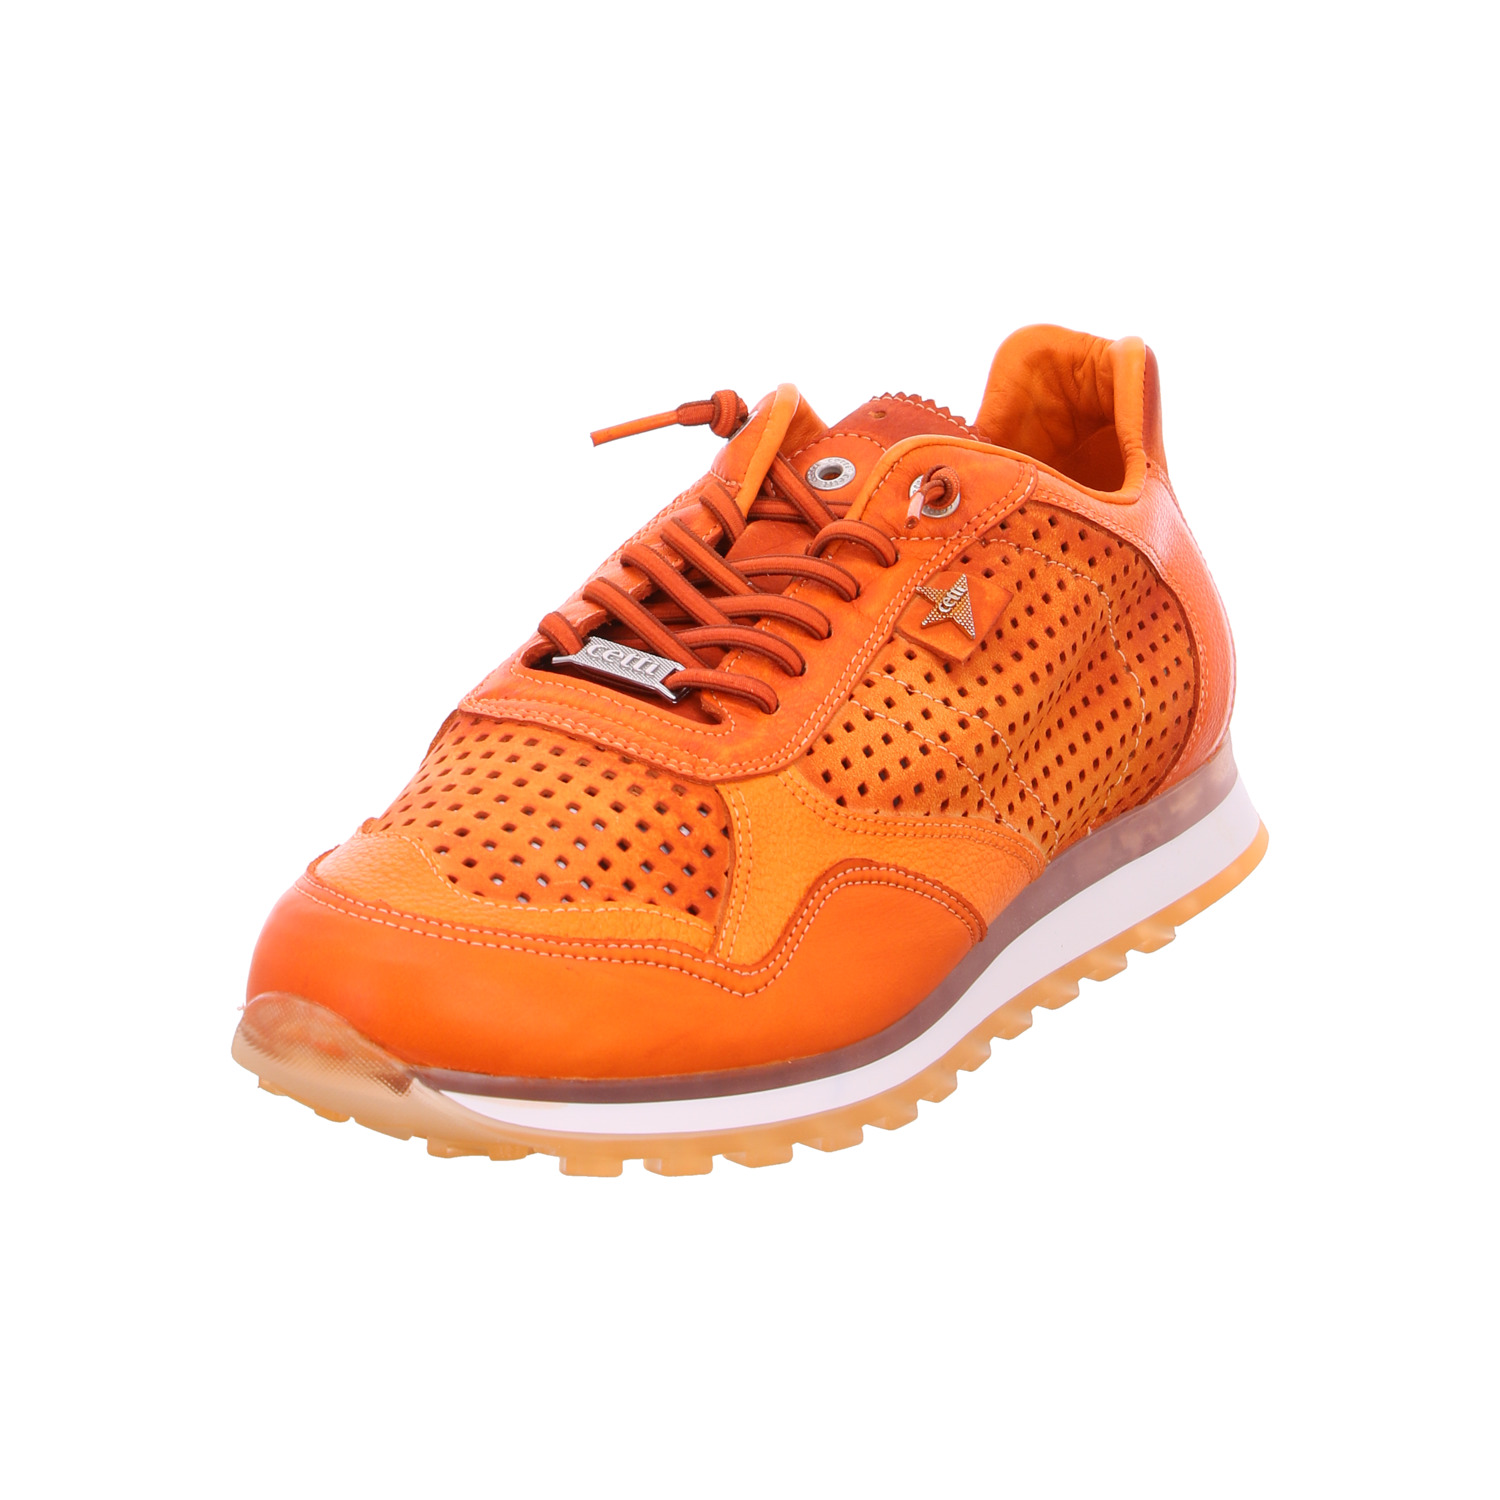 katolsk Hula hop Rusland Cetti Sneaker Orange 119442 H&D Shoes Online Shop